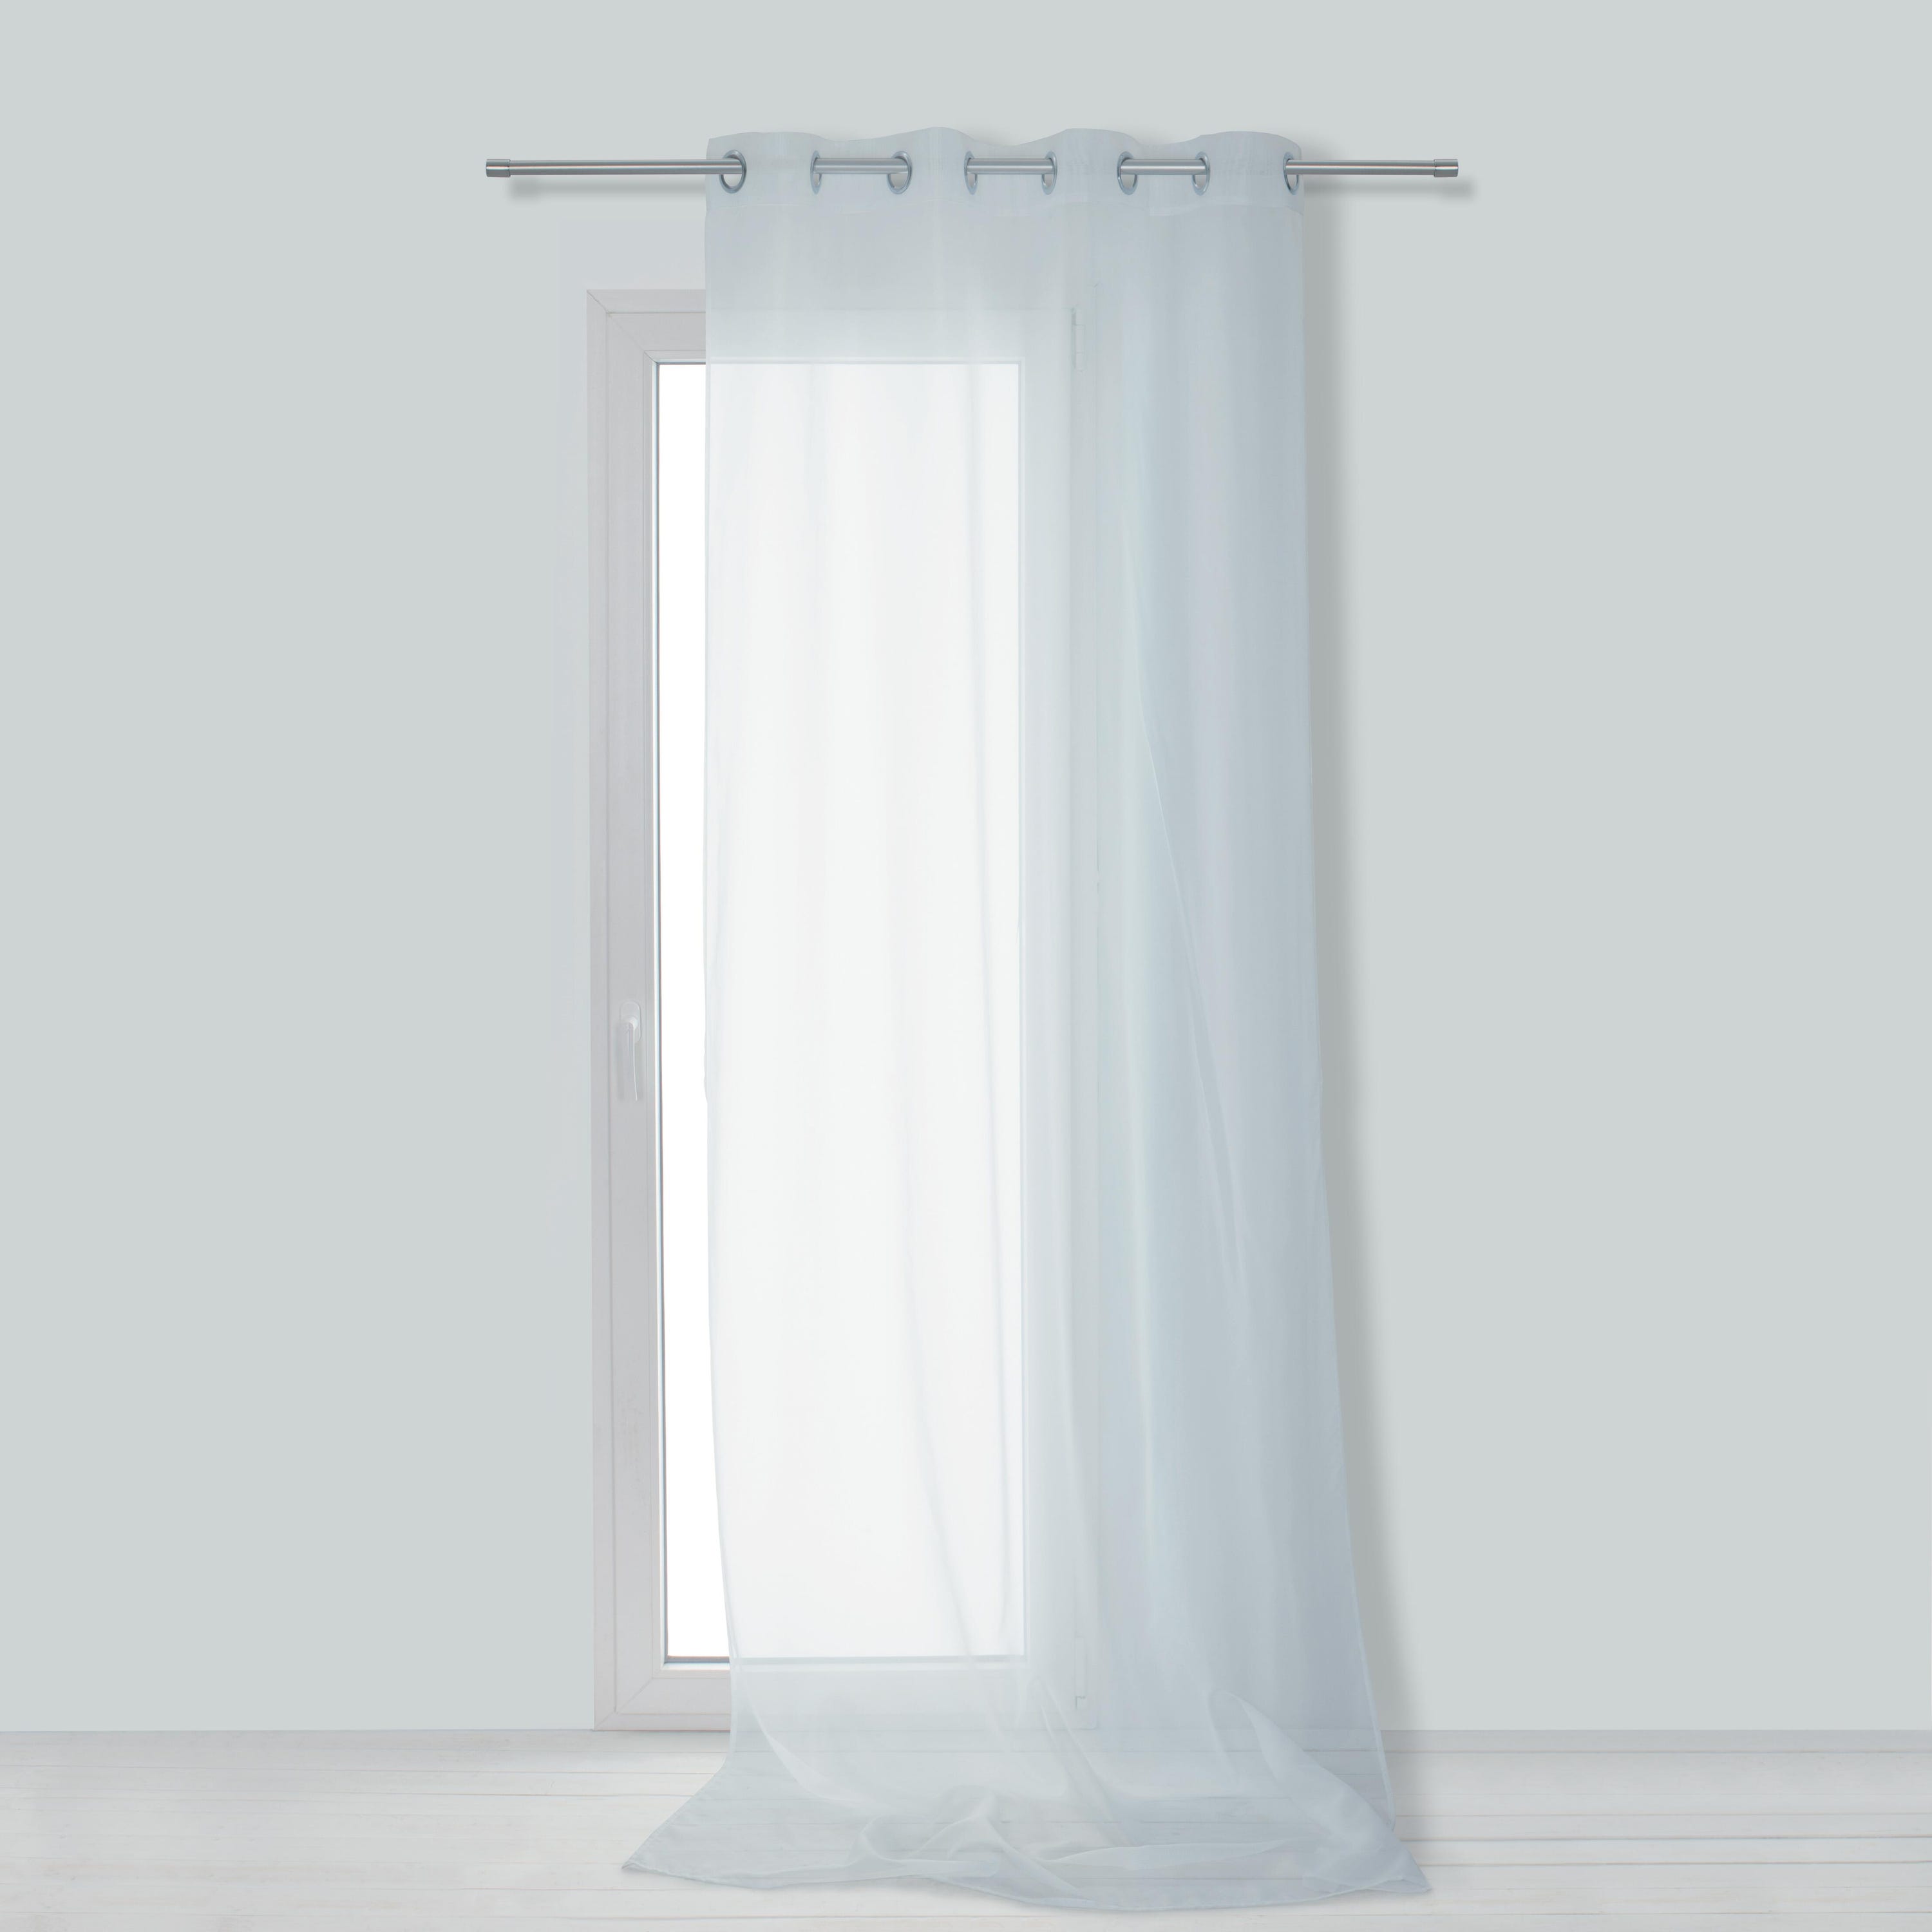 Tenda INSPIRE Pharell bianco fettuccia con passanti nascosti 140 x 280 cm